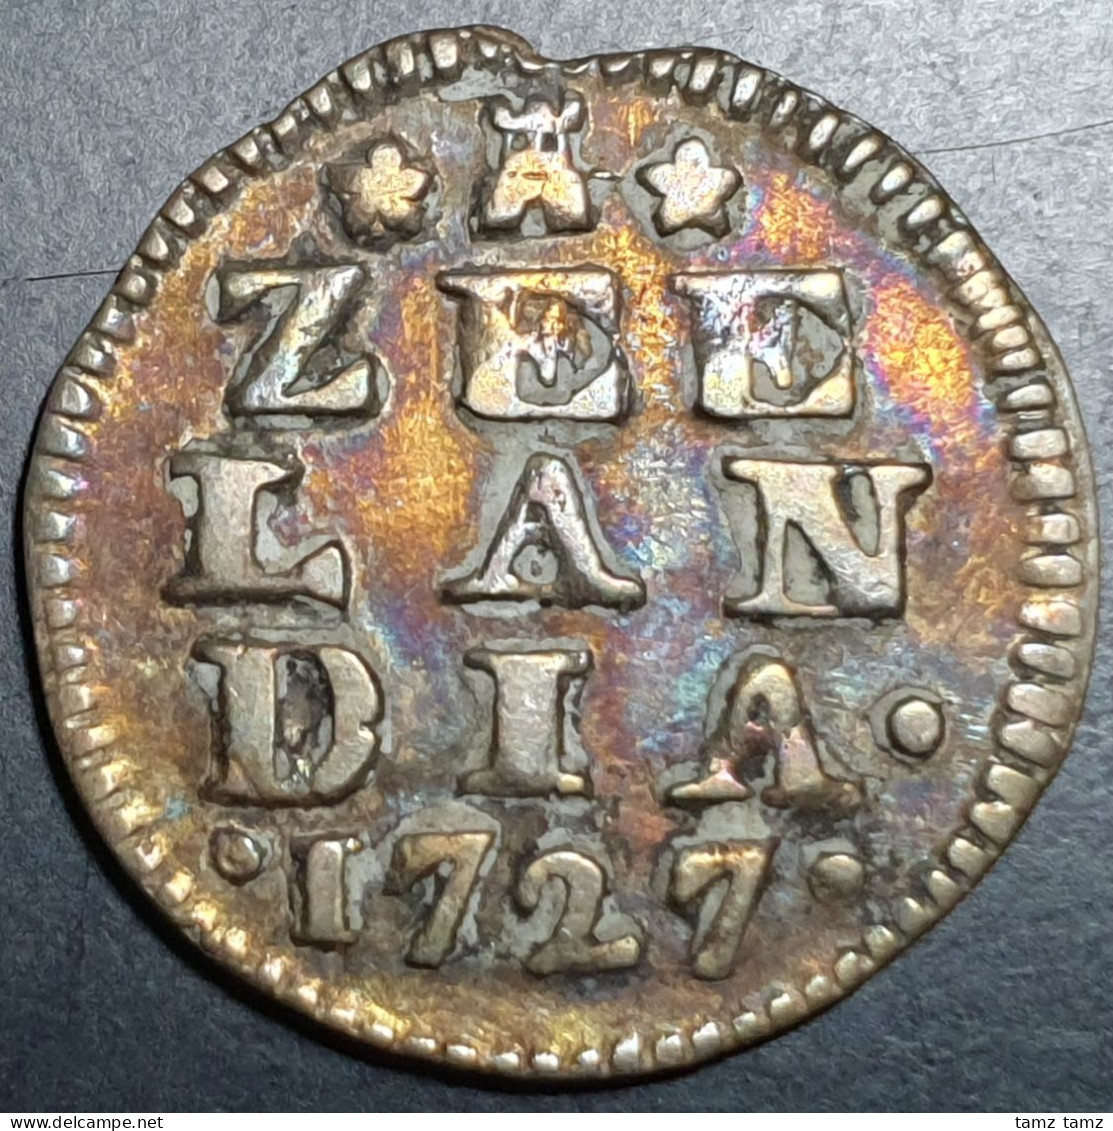 Provincial Dutch Netherlands Zeeland Zeelandia 2 Stuiver 1727 Silver Nice Toning - Provinzen